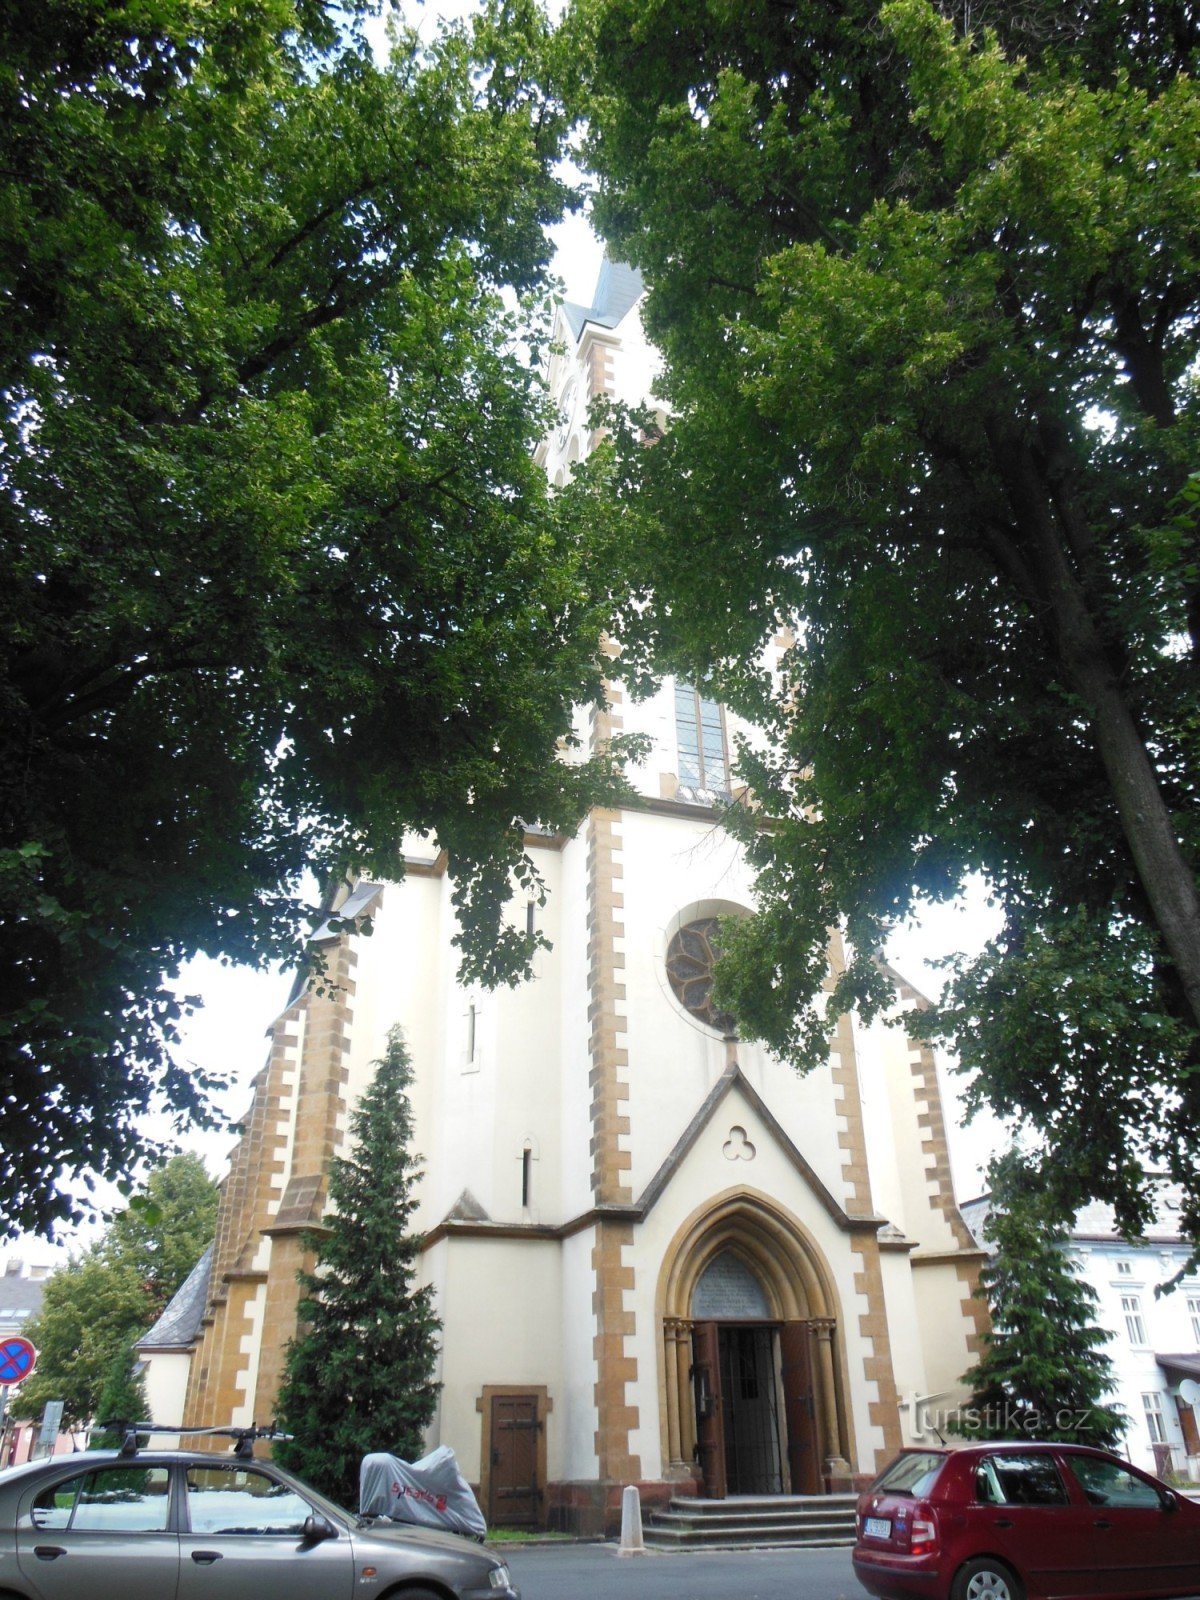 view of the church through the linden trees of Lipový náměstí